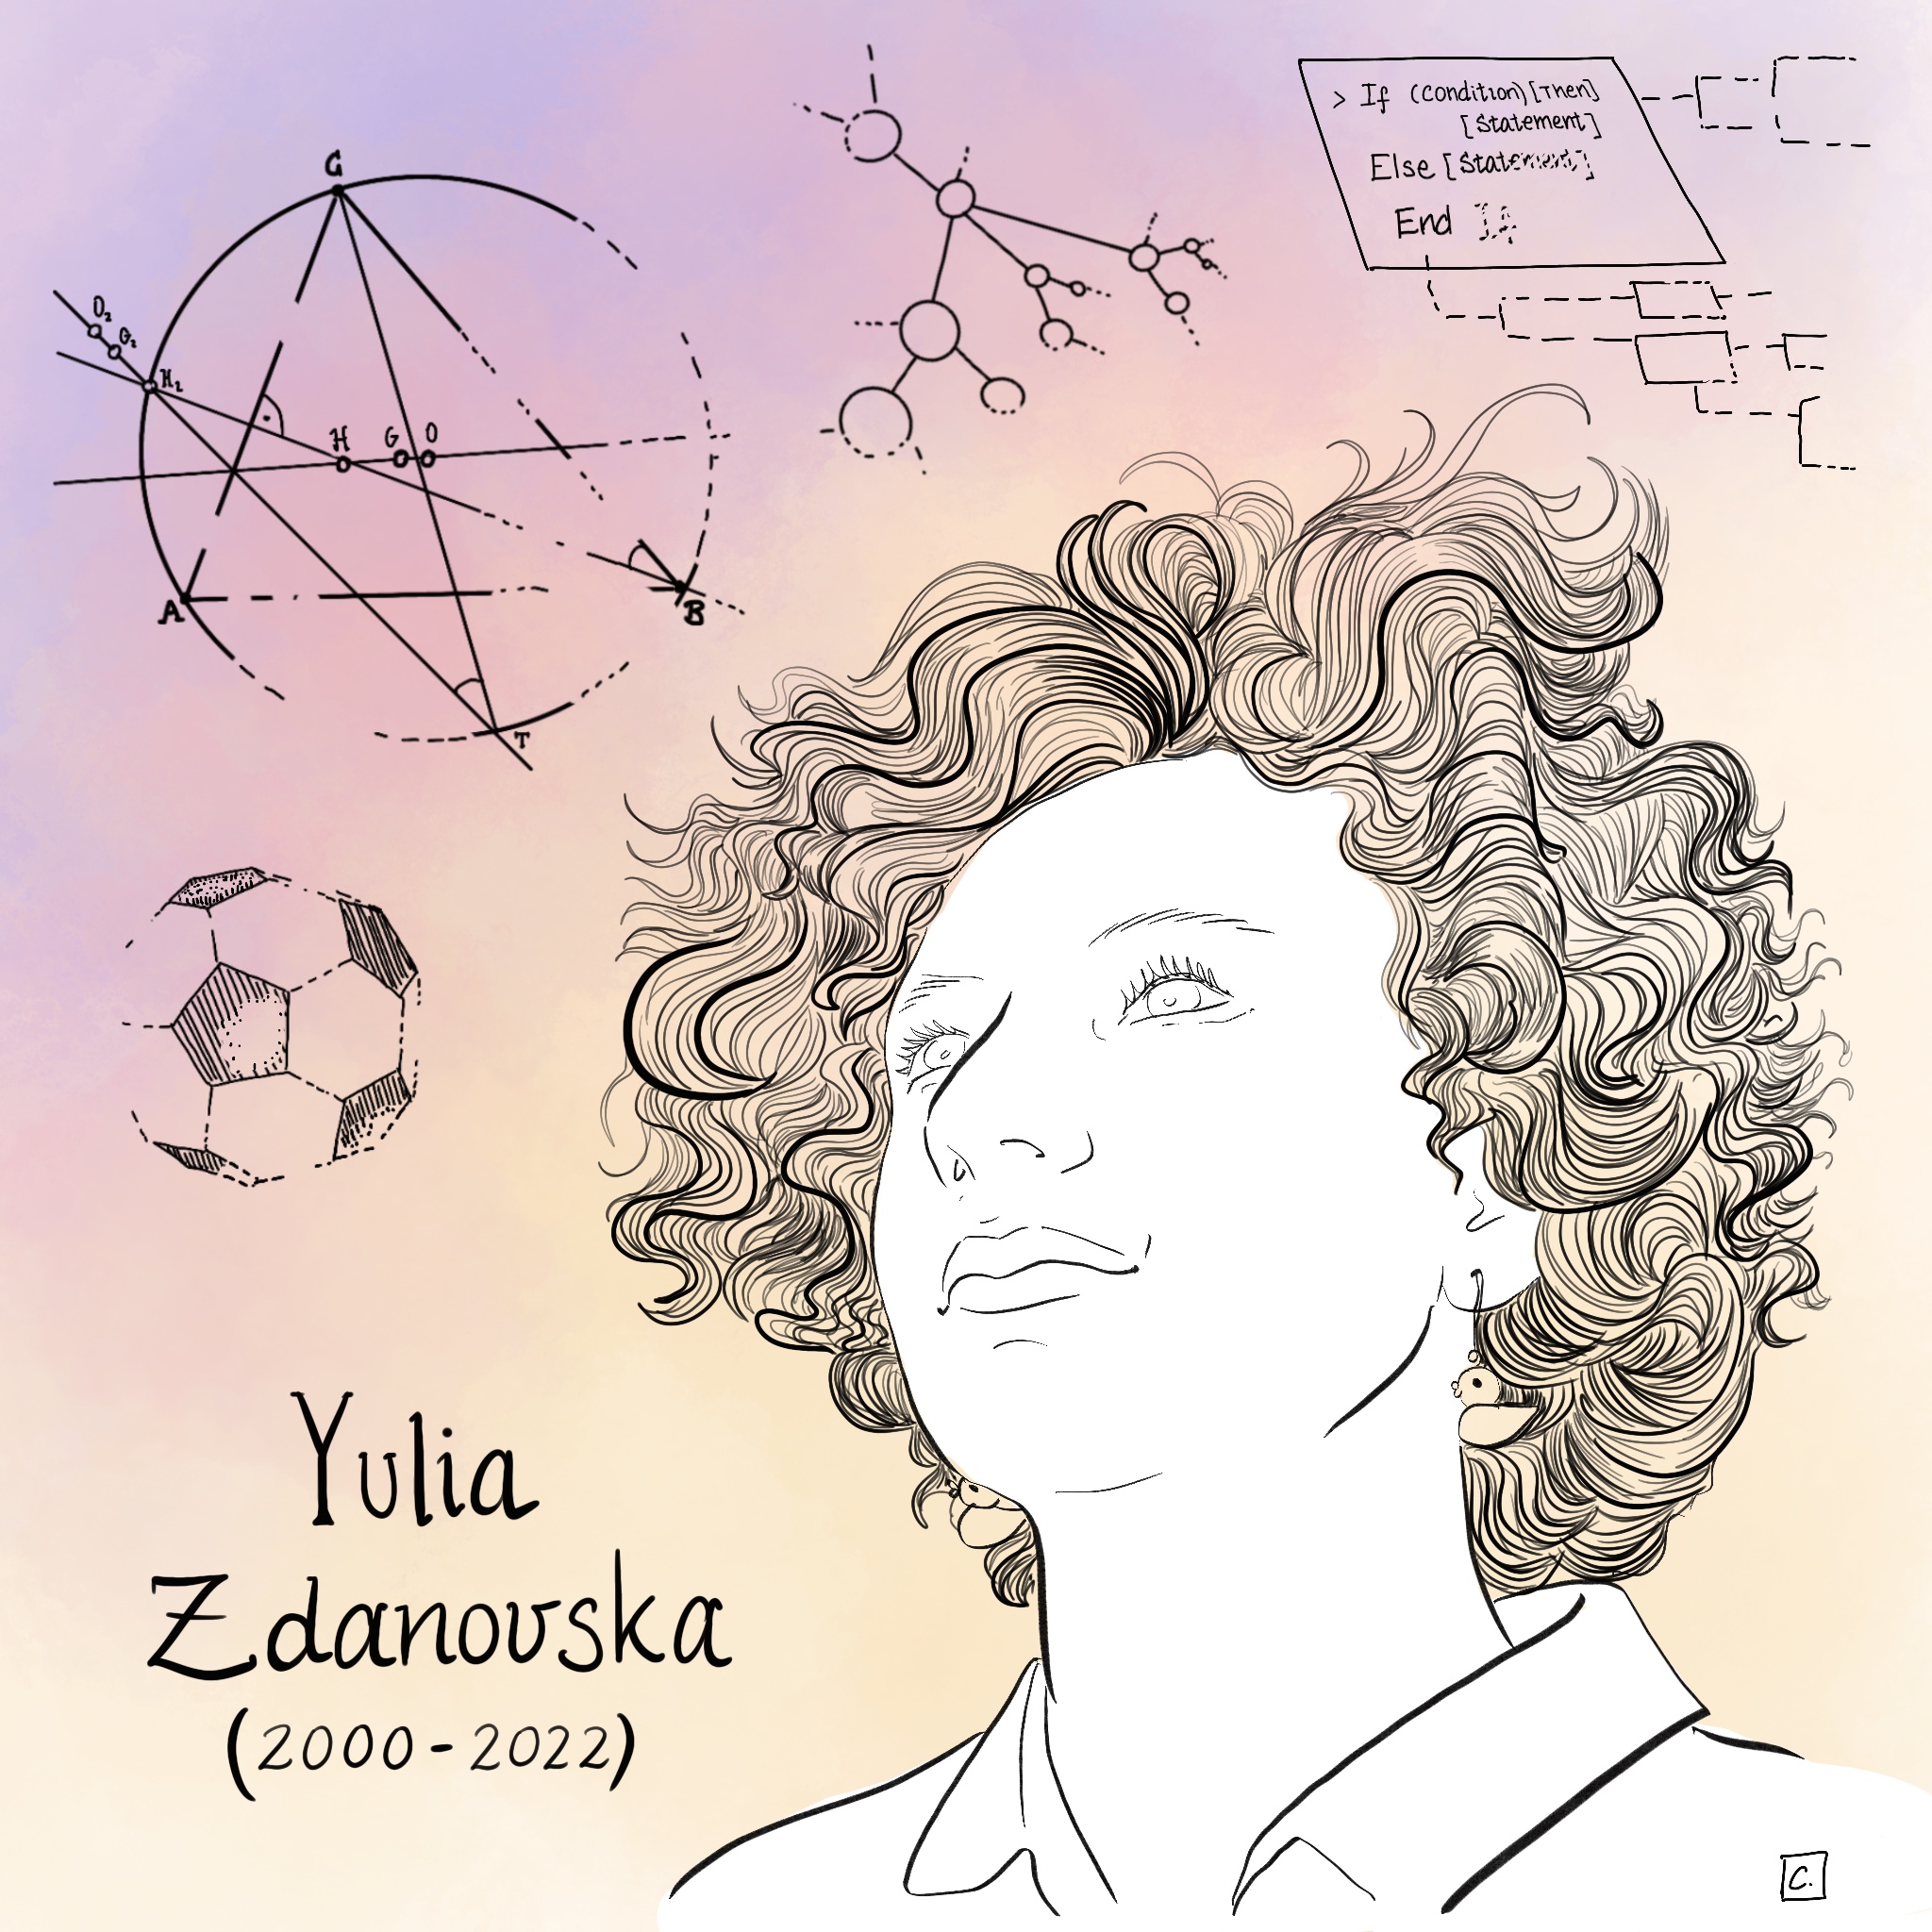 Yulia Zdanovska pictured by Constanza Rojas-Molina, mathematician and illustrator